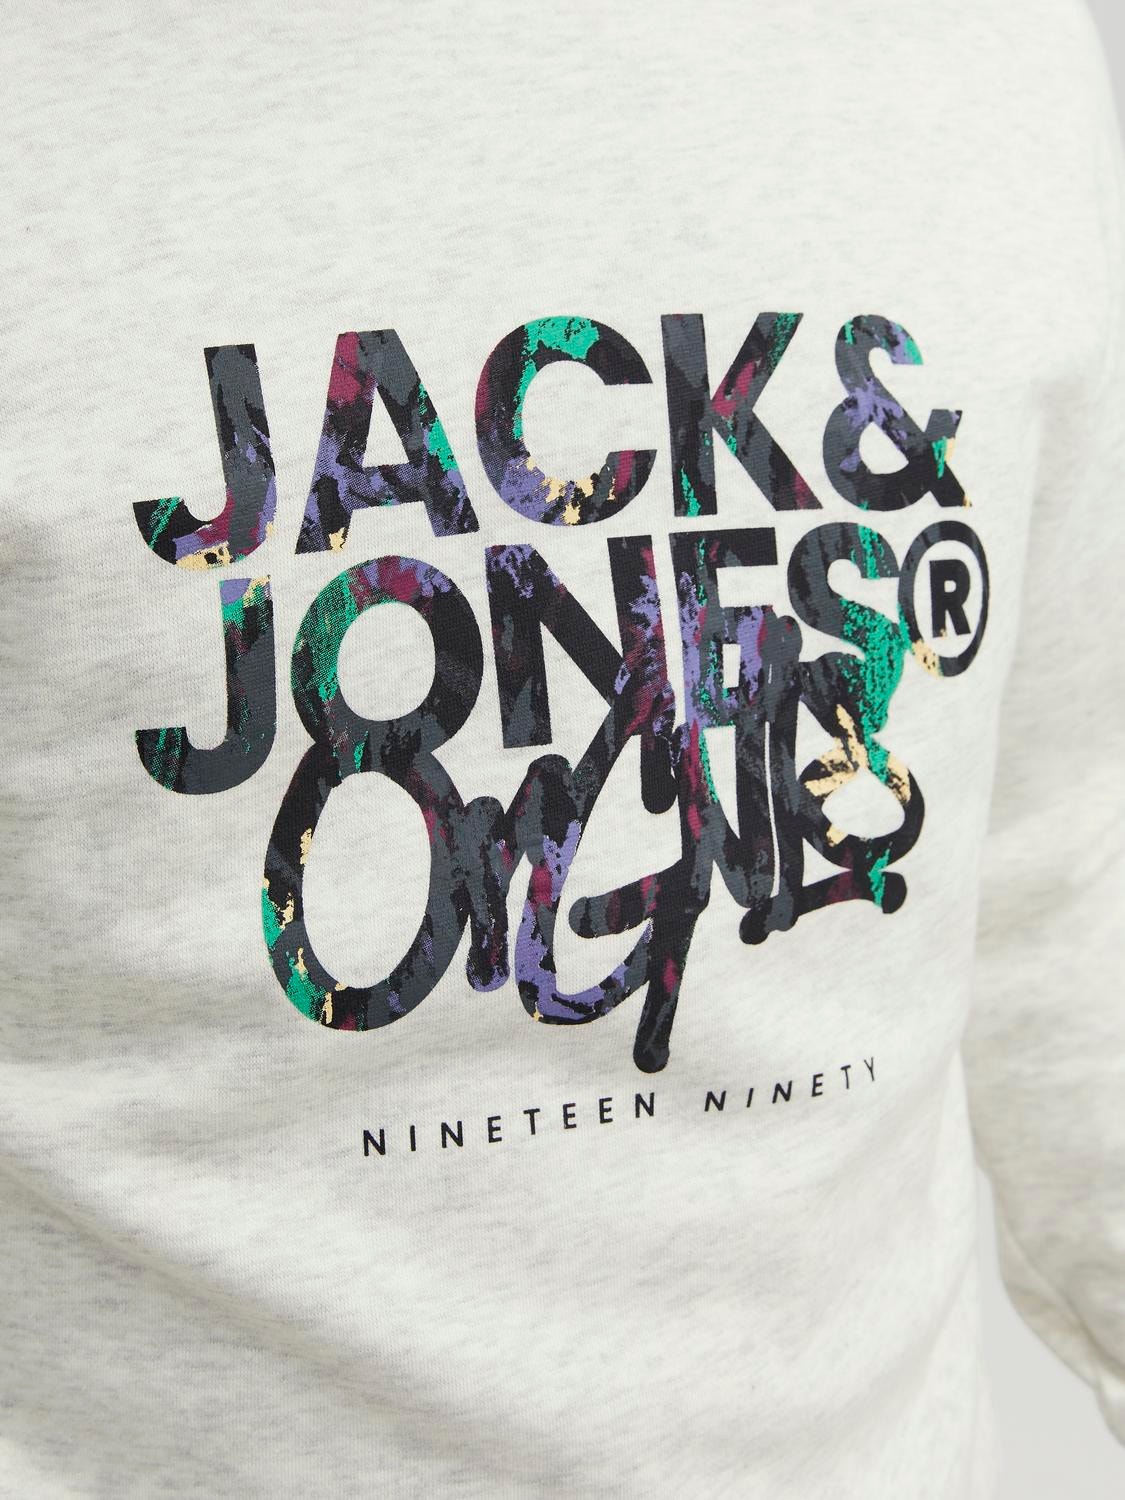 Jack & Jones Printed Crew neck Sweatshirt -White Melange - 12242366